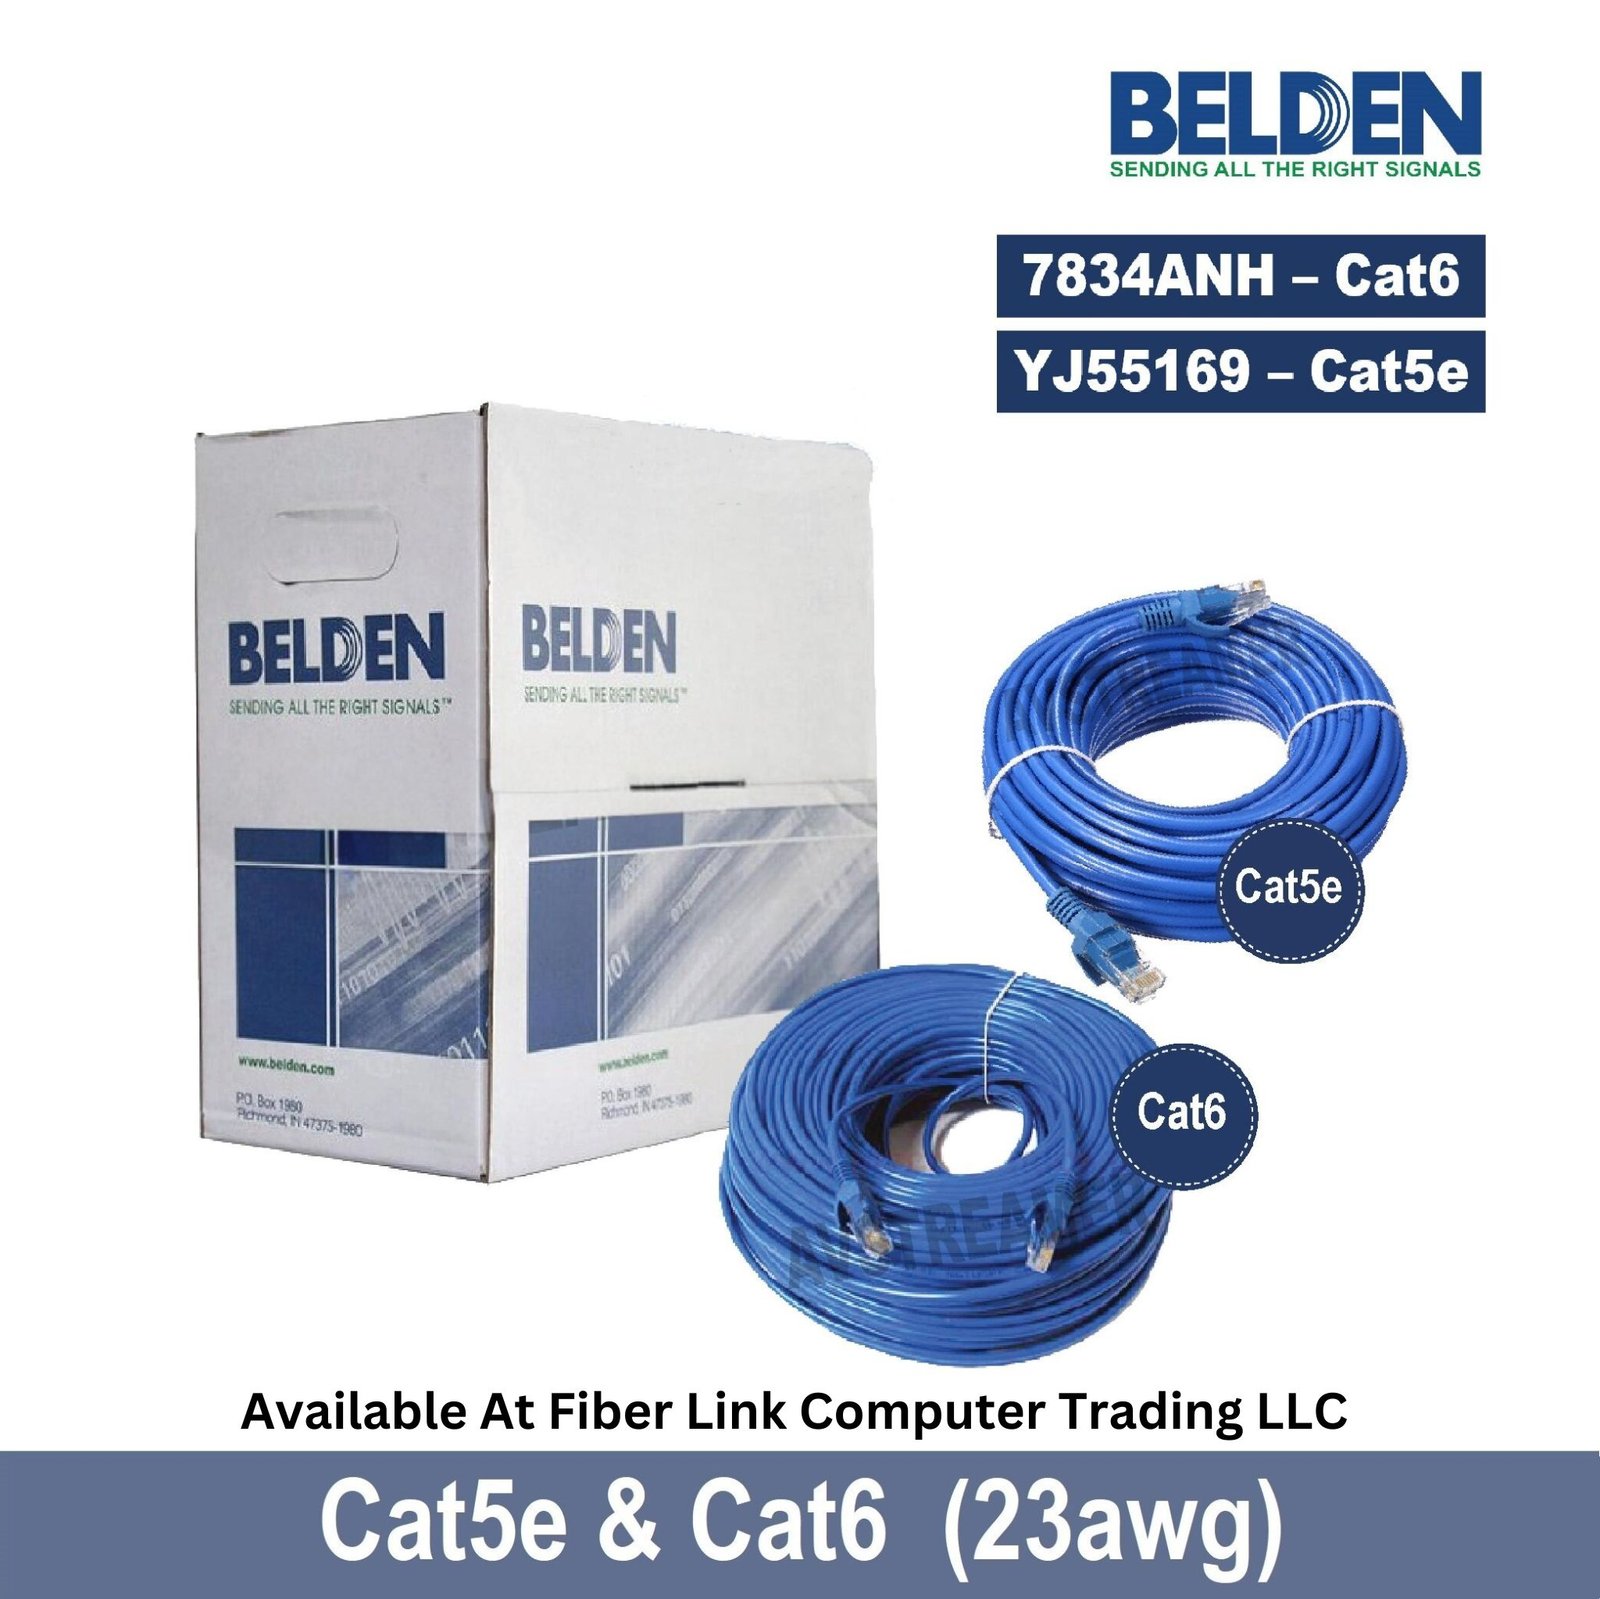 Belden CAT6 cable supplier in Dubai